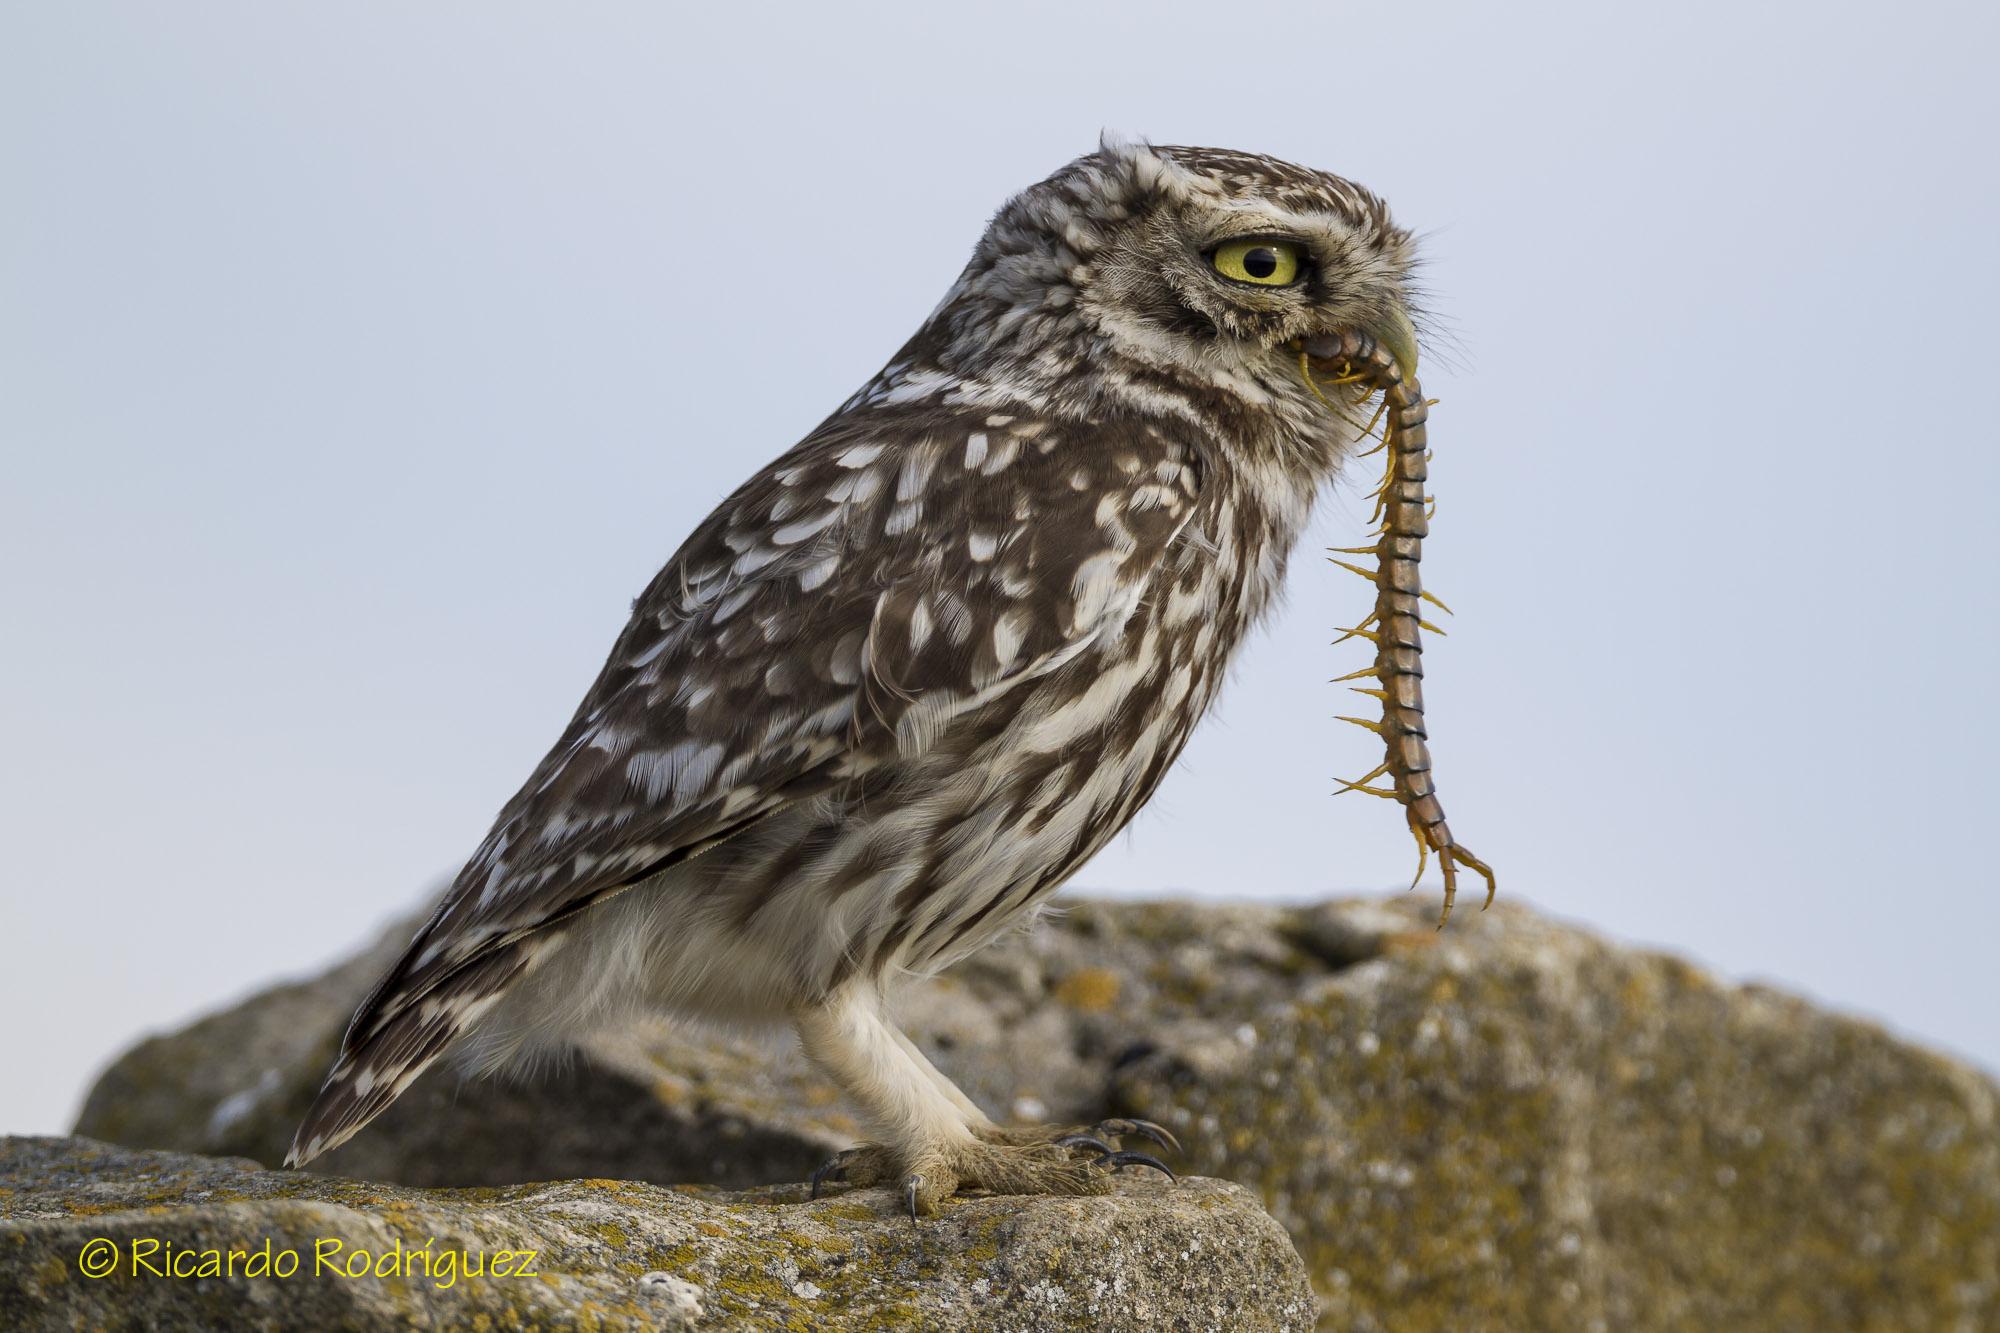 I-owl encane ne-prey